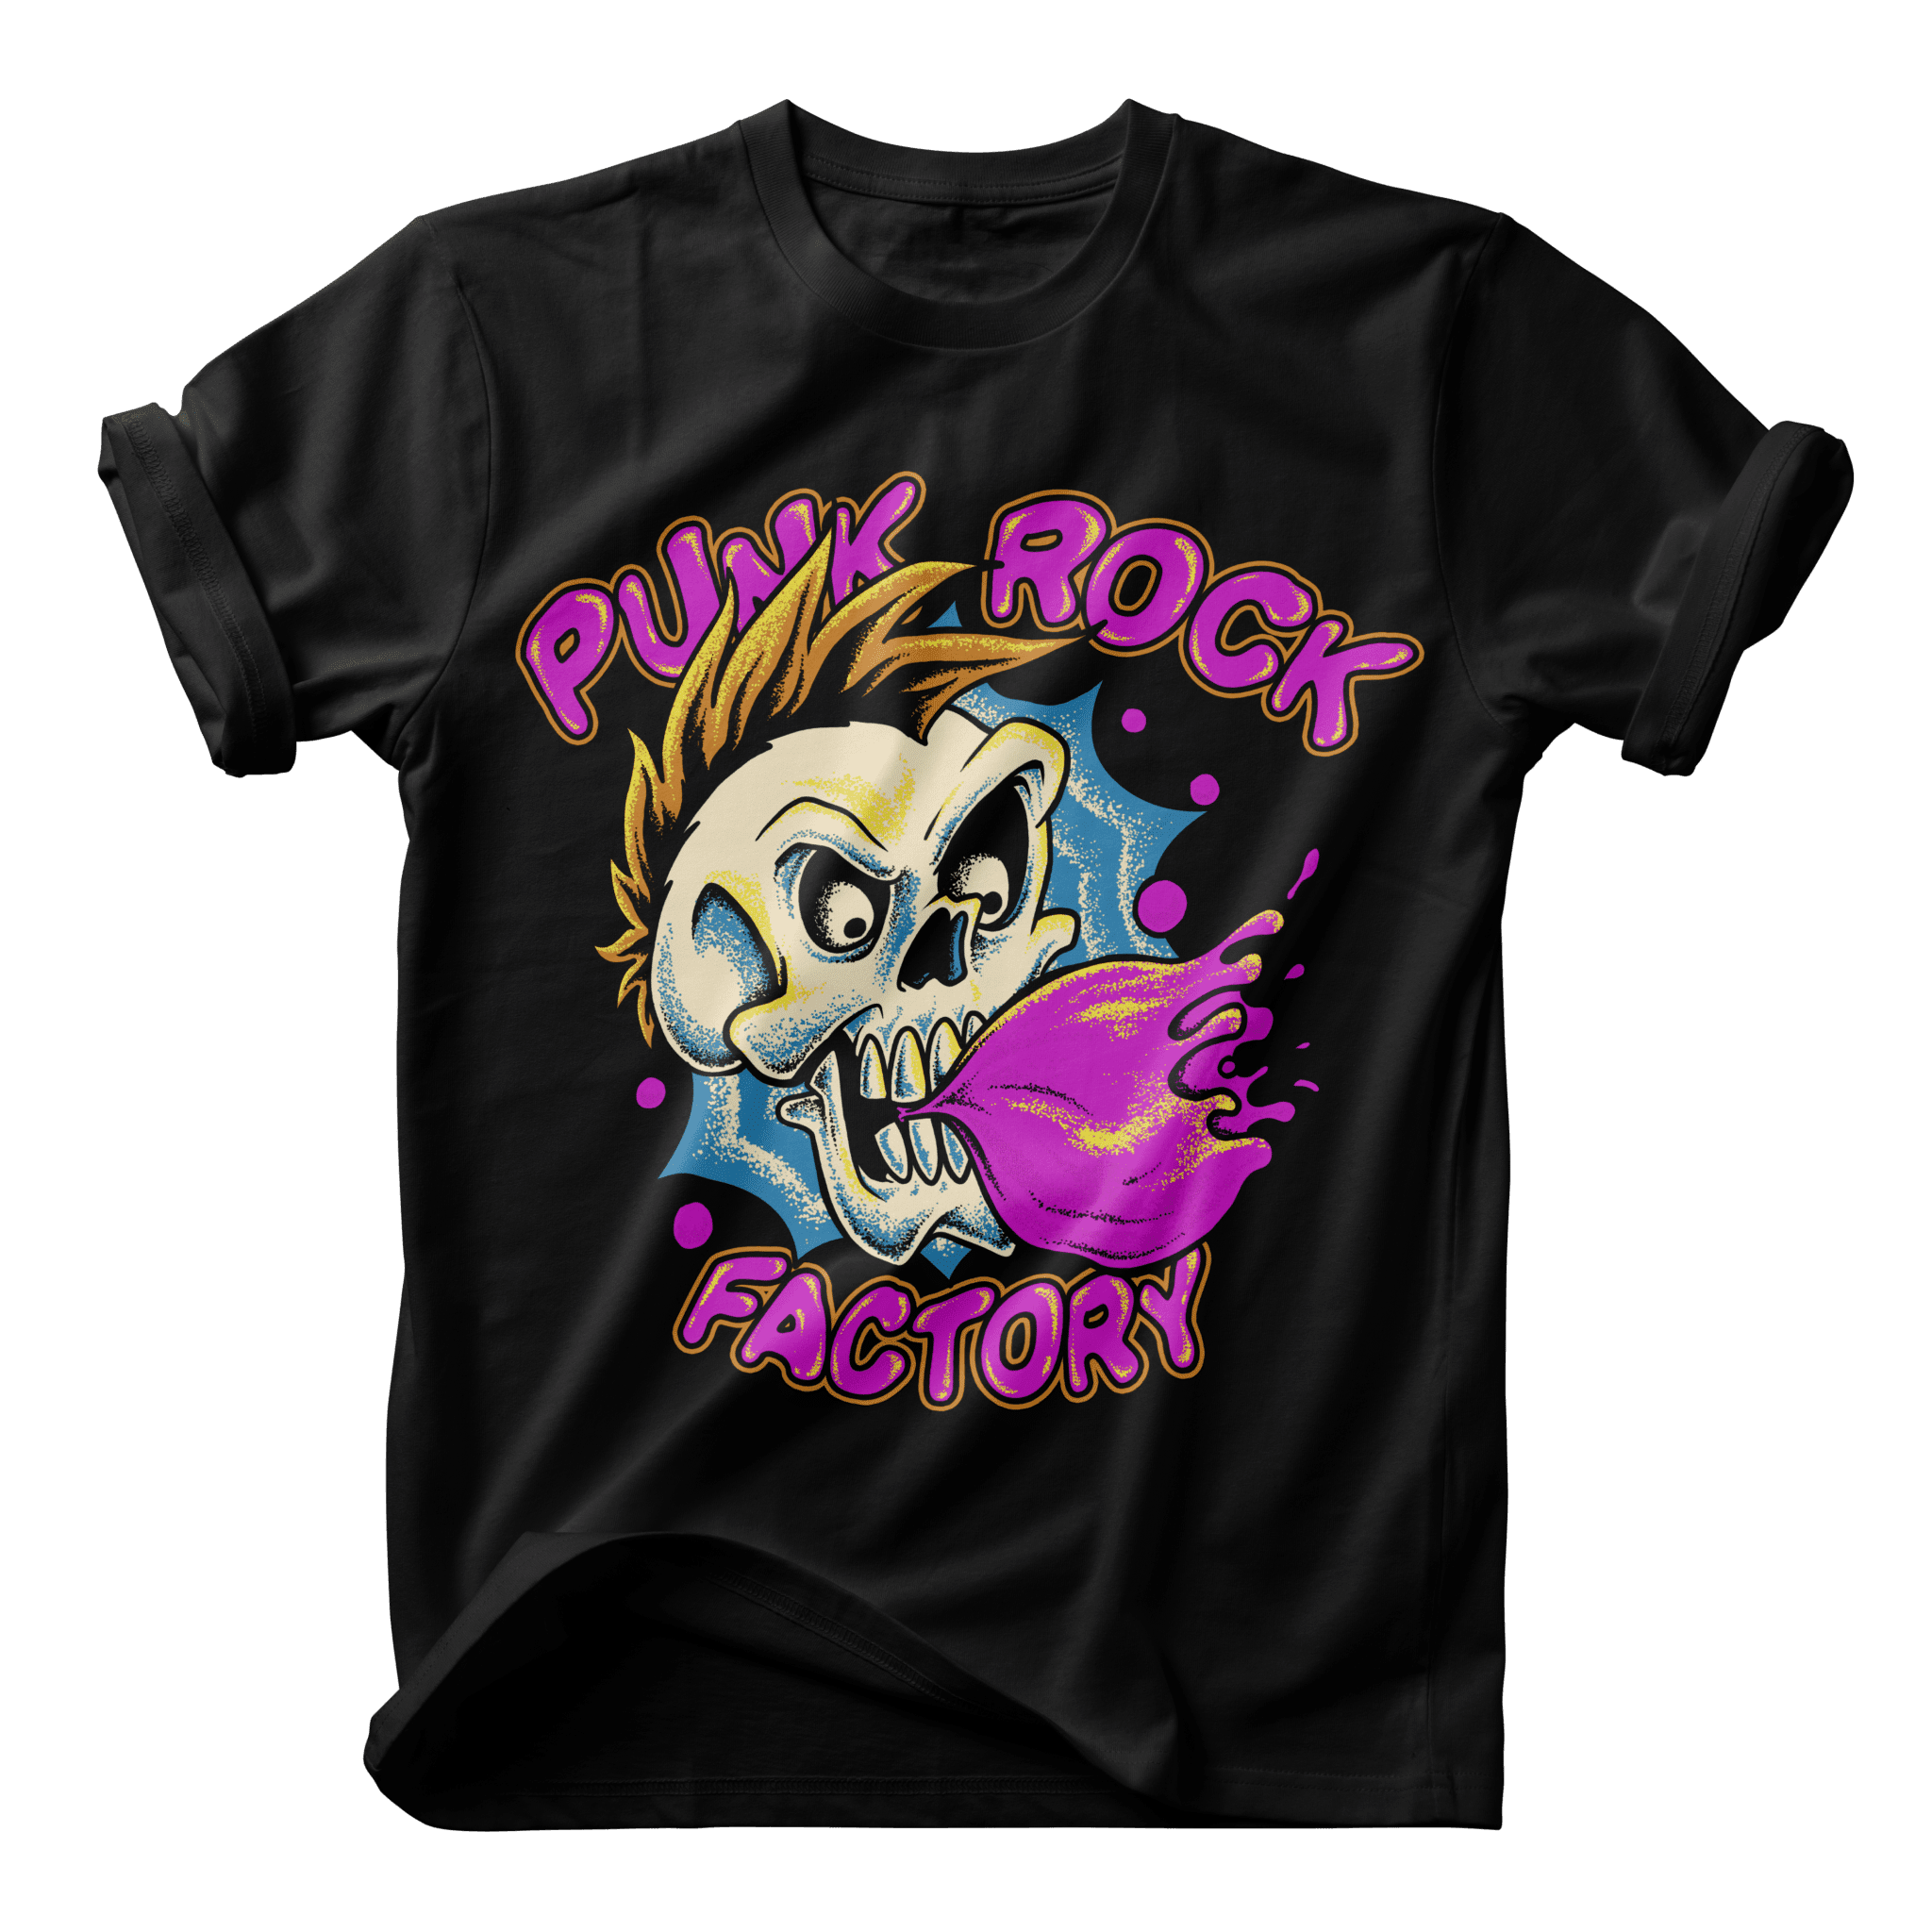 Bubblegum Skull Punk Rock Factory 